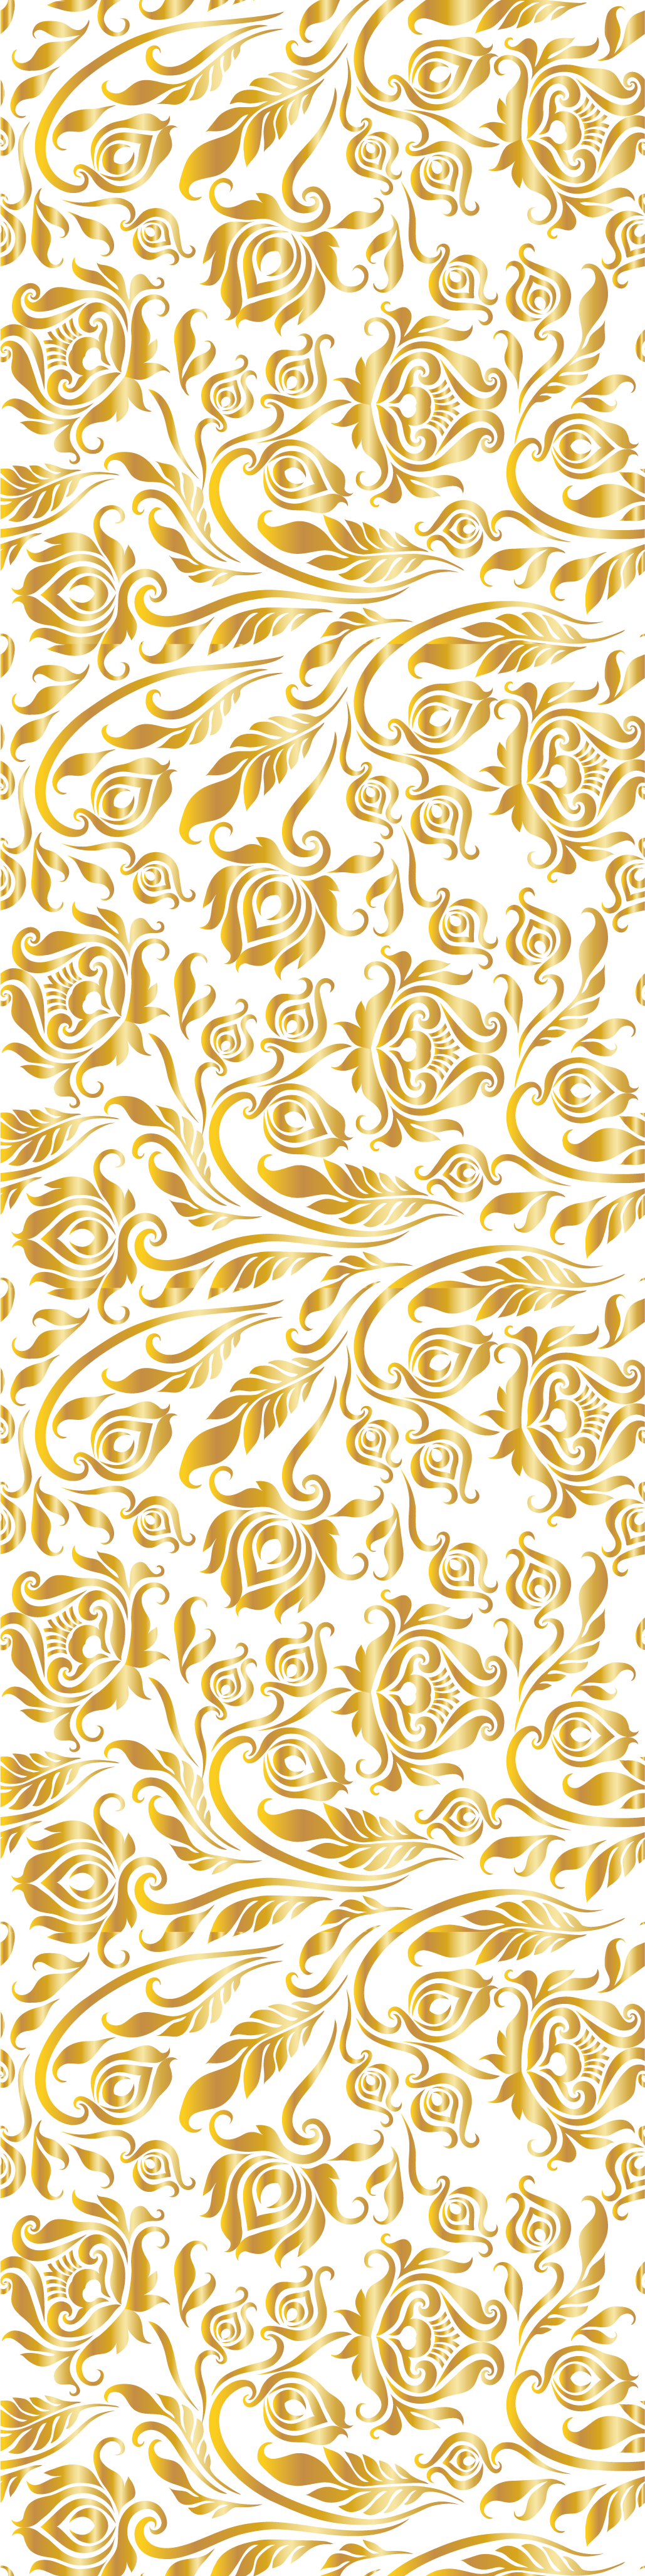 Golden GuimarãEs Pattern Paper Flower Luxury Clipart